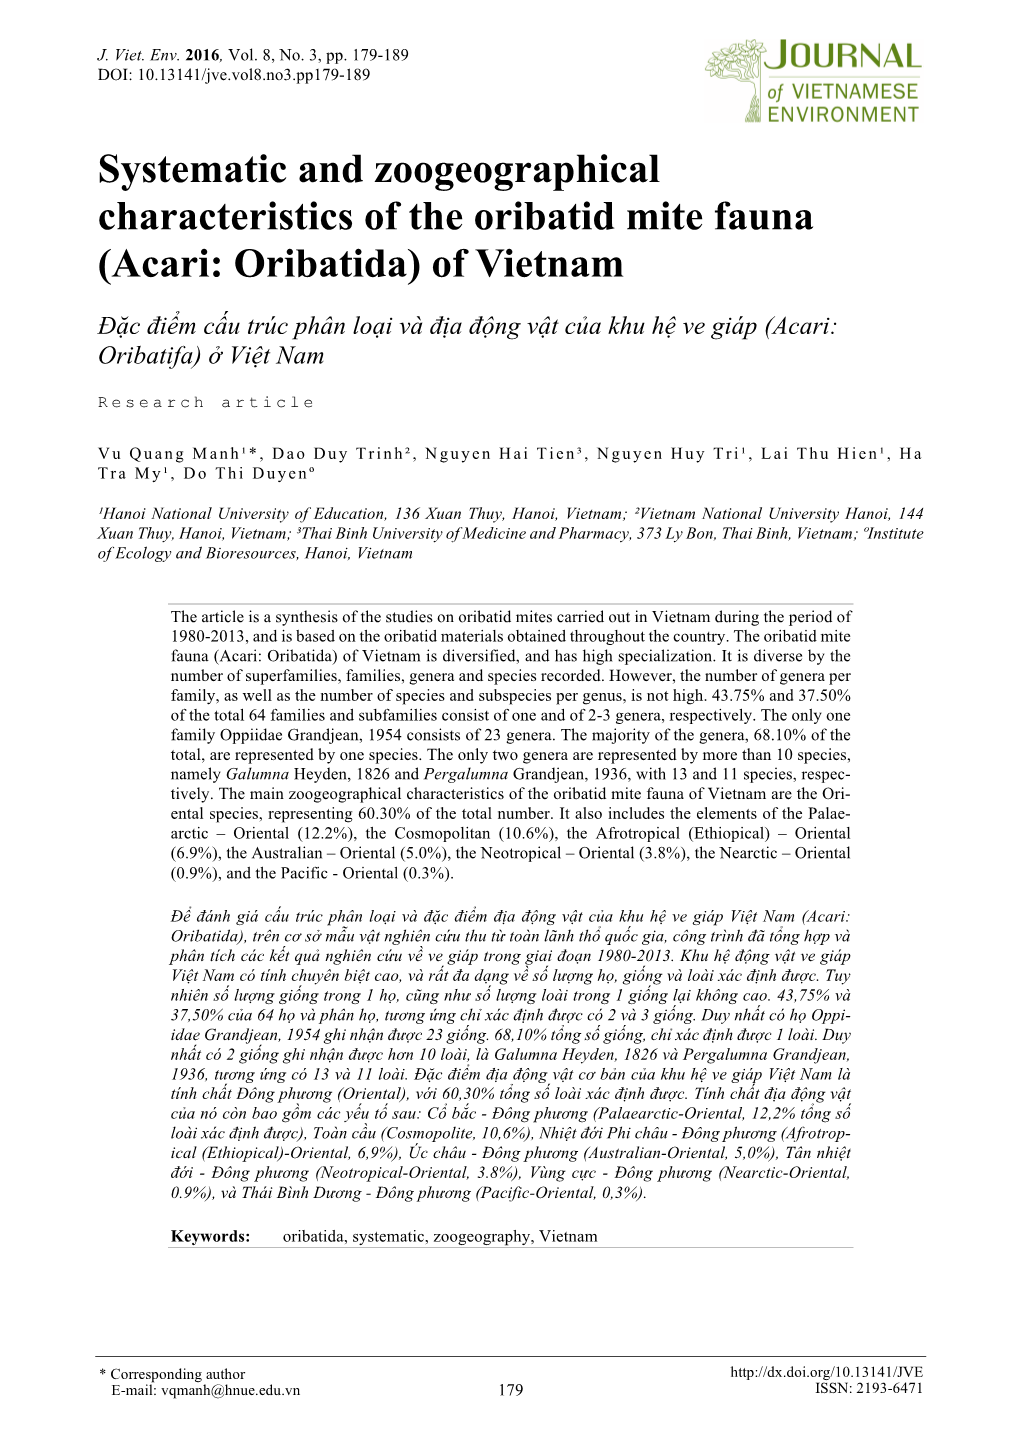 Systematic and Zoogeographical Characteristics of the Oribatid Mite Fauna (Acari: Oribatida) of Vietnam